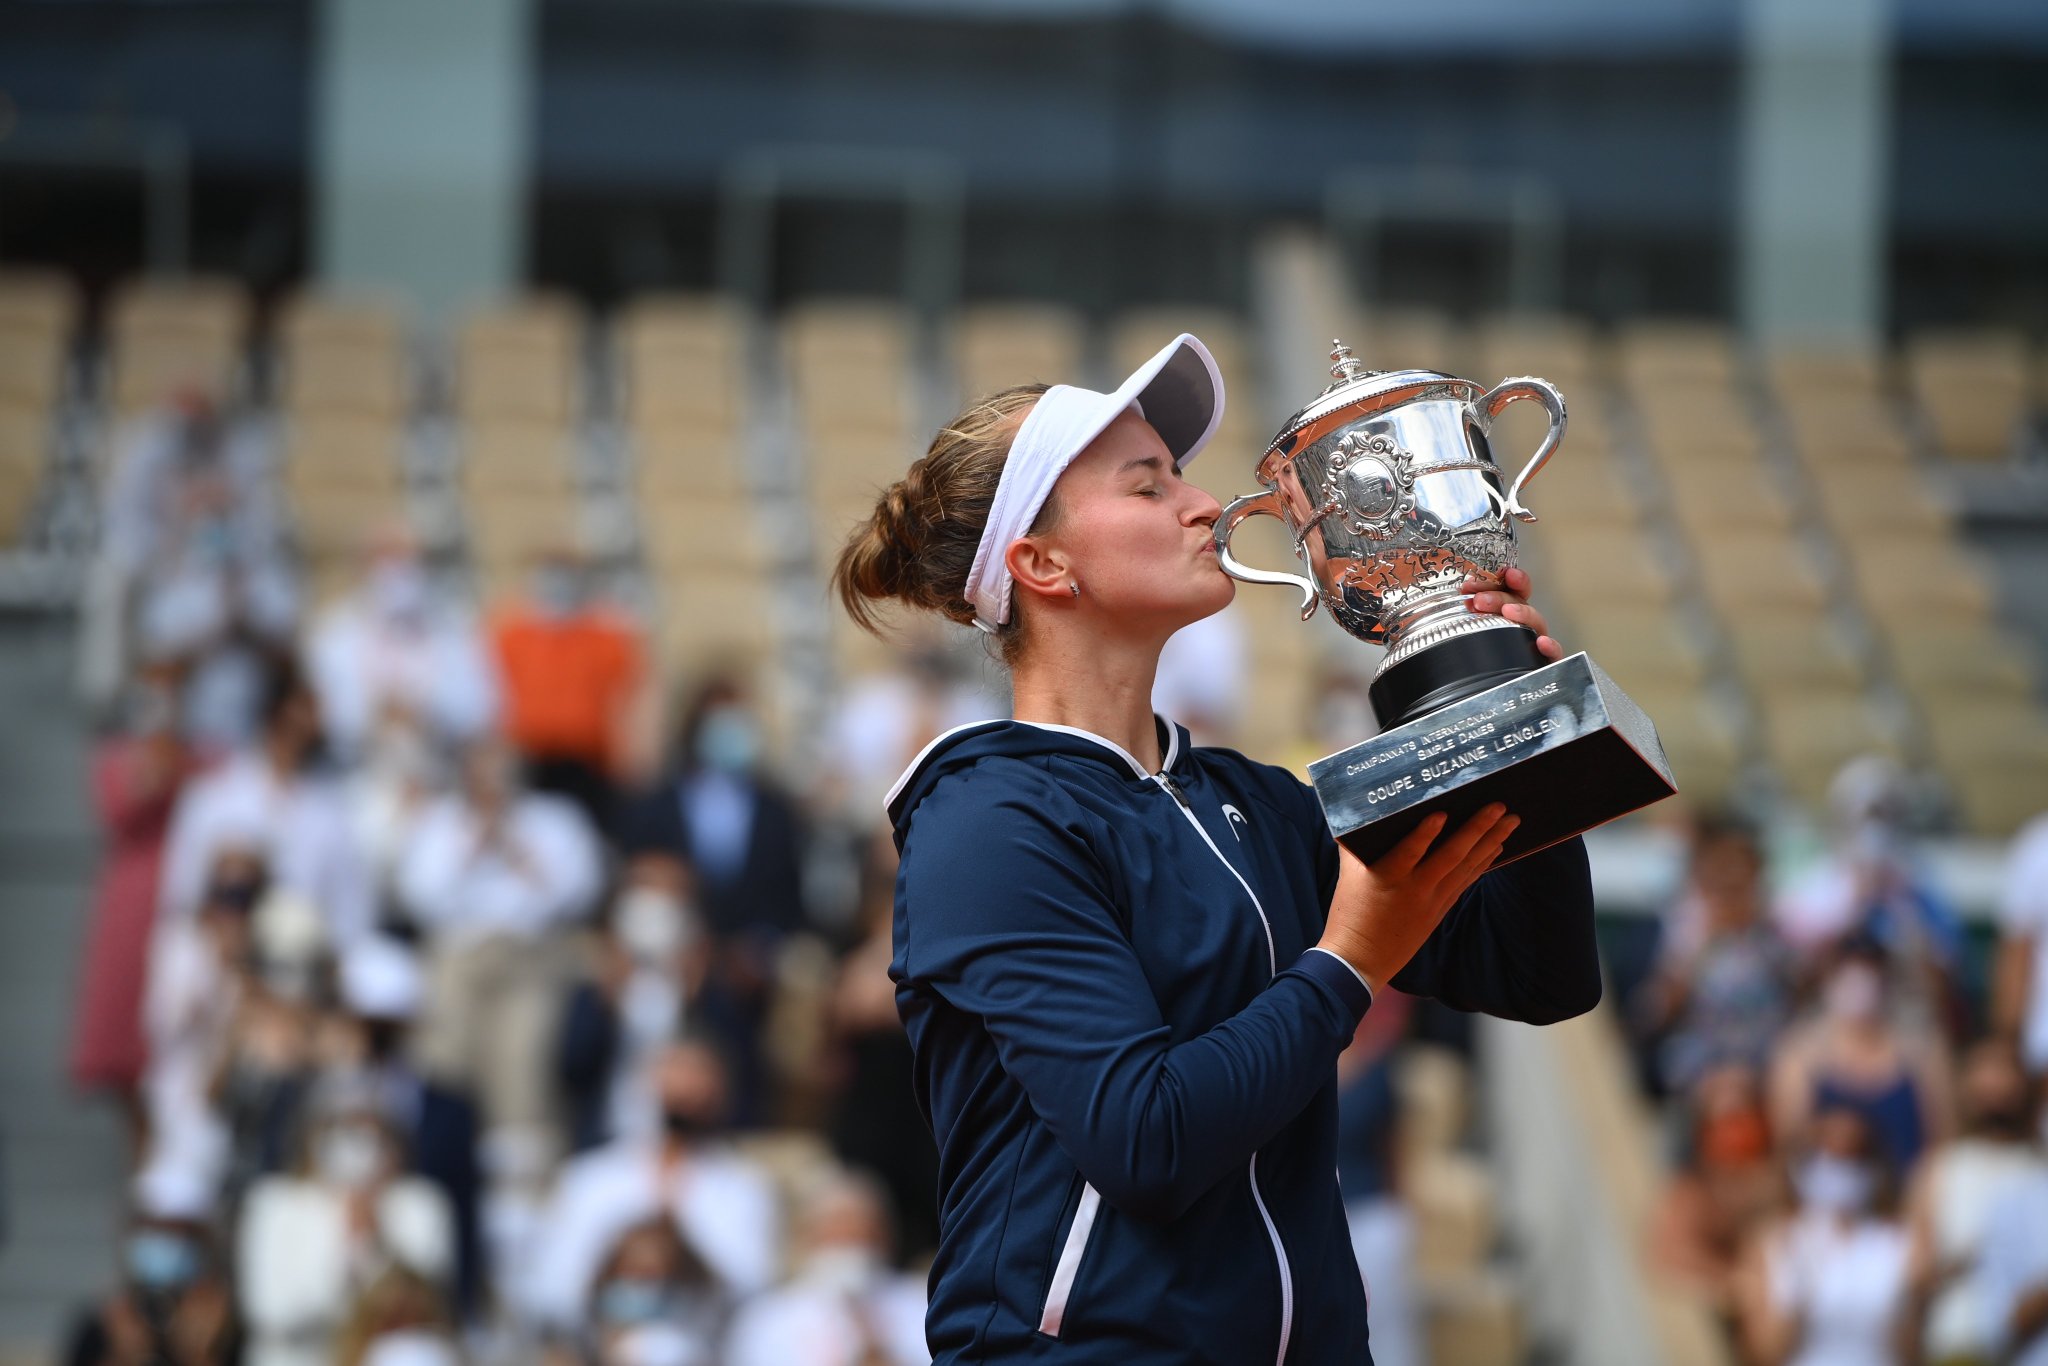 Krejcikova es la sexta jugadora consecutiva que gana su primer Grand Slam en París.